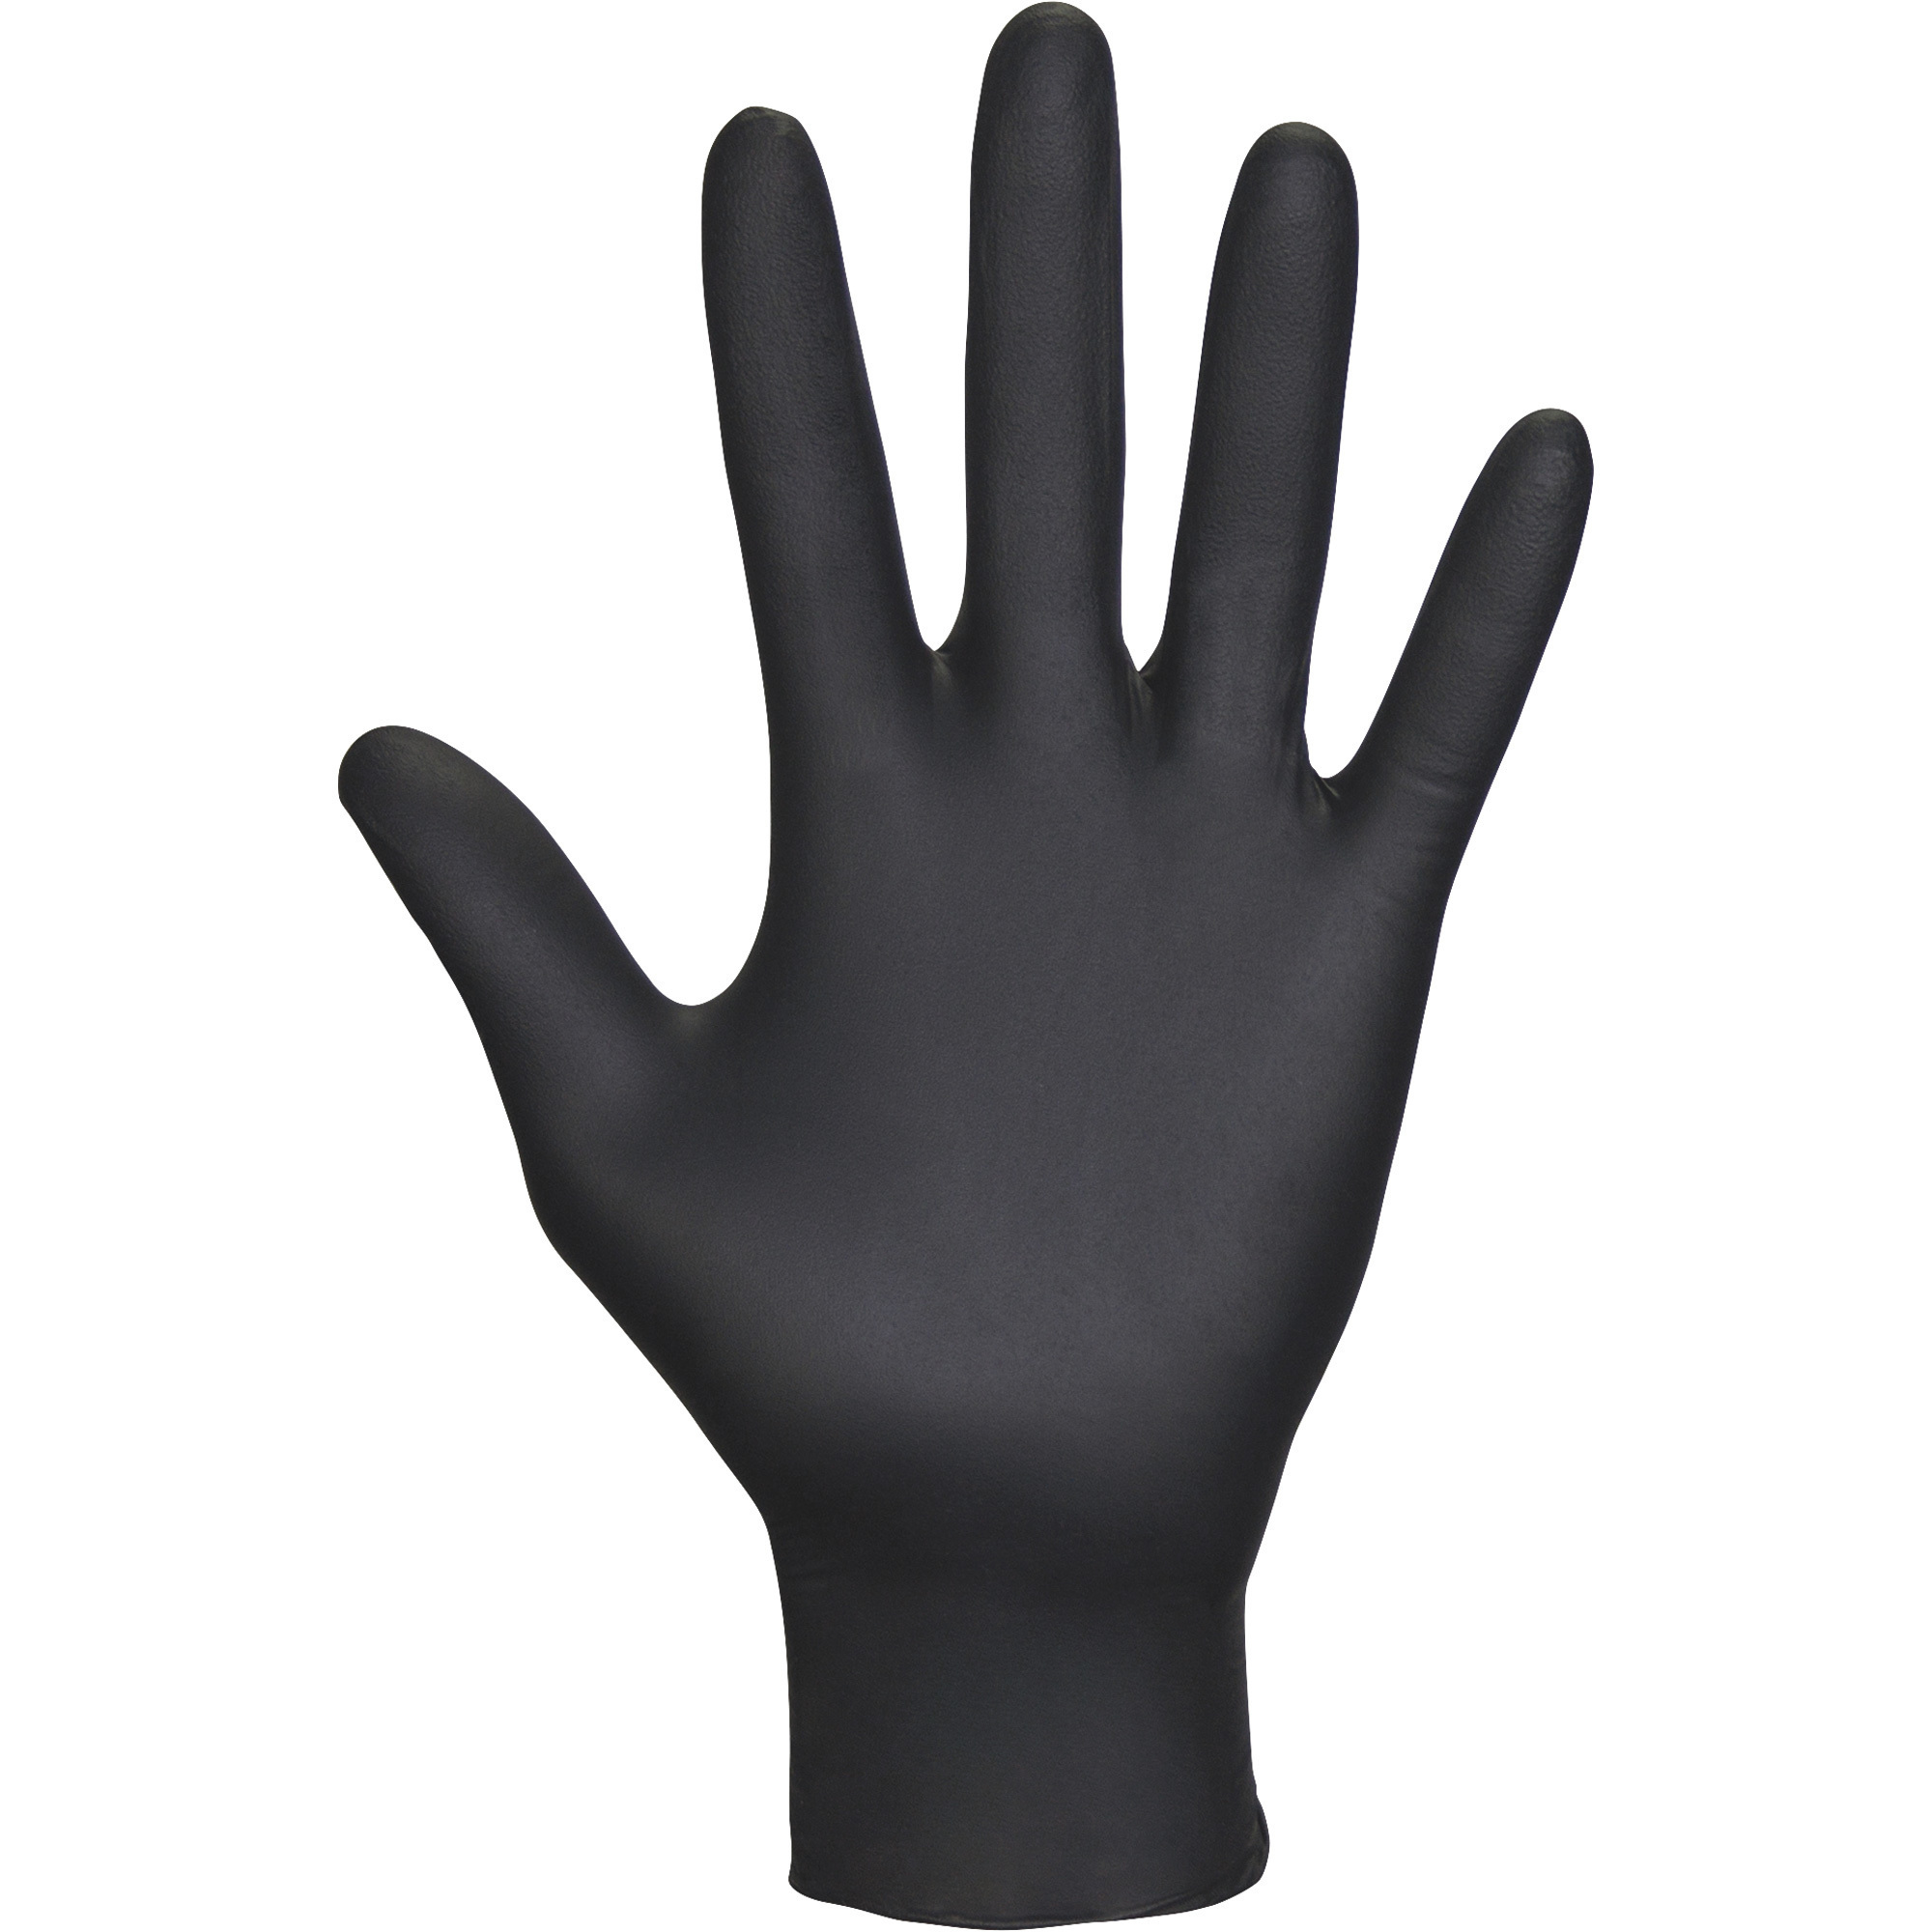 6 Mil SAS Raven Nitrile Powder-Free Disposable Gloves - 50 Pairs, Black, XL, ASTM D6978 Rated, Model# 66518